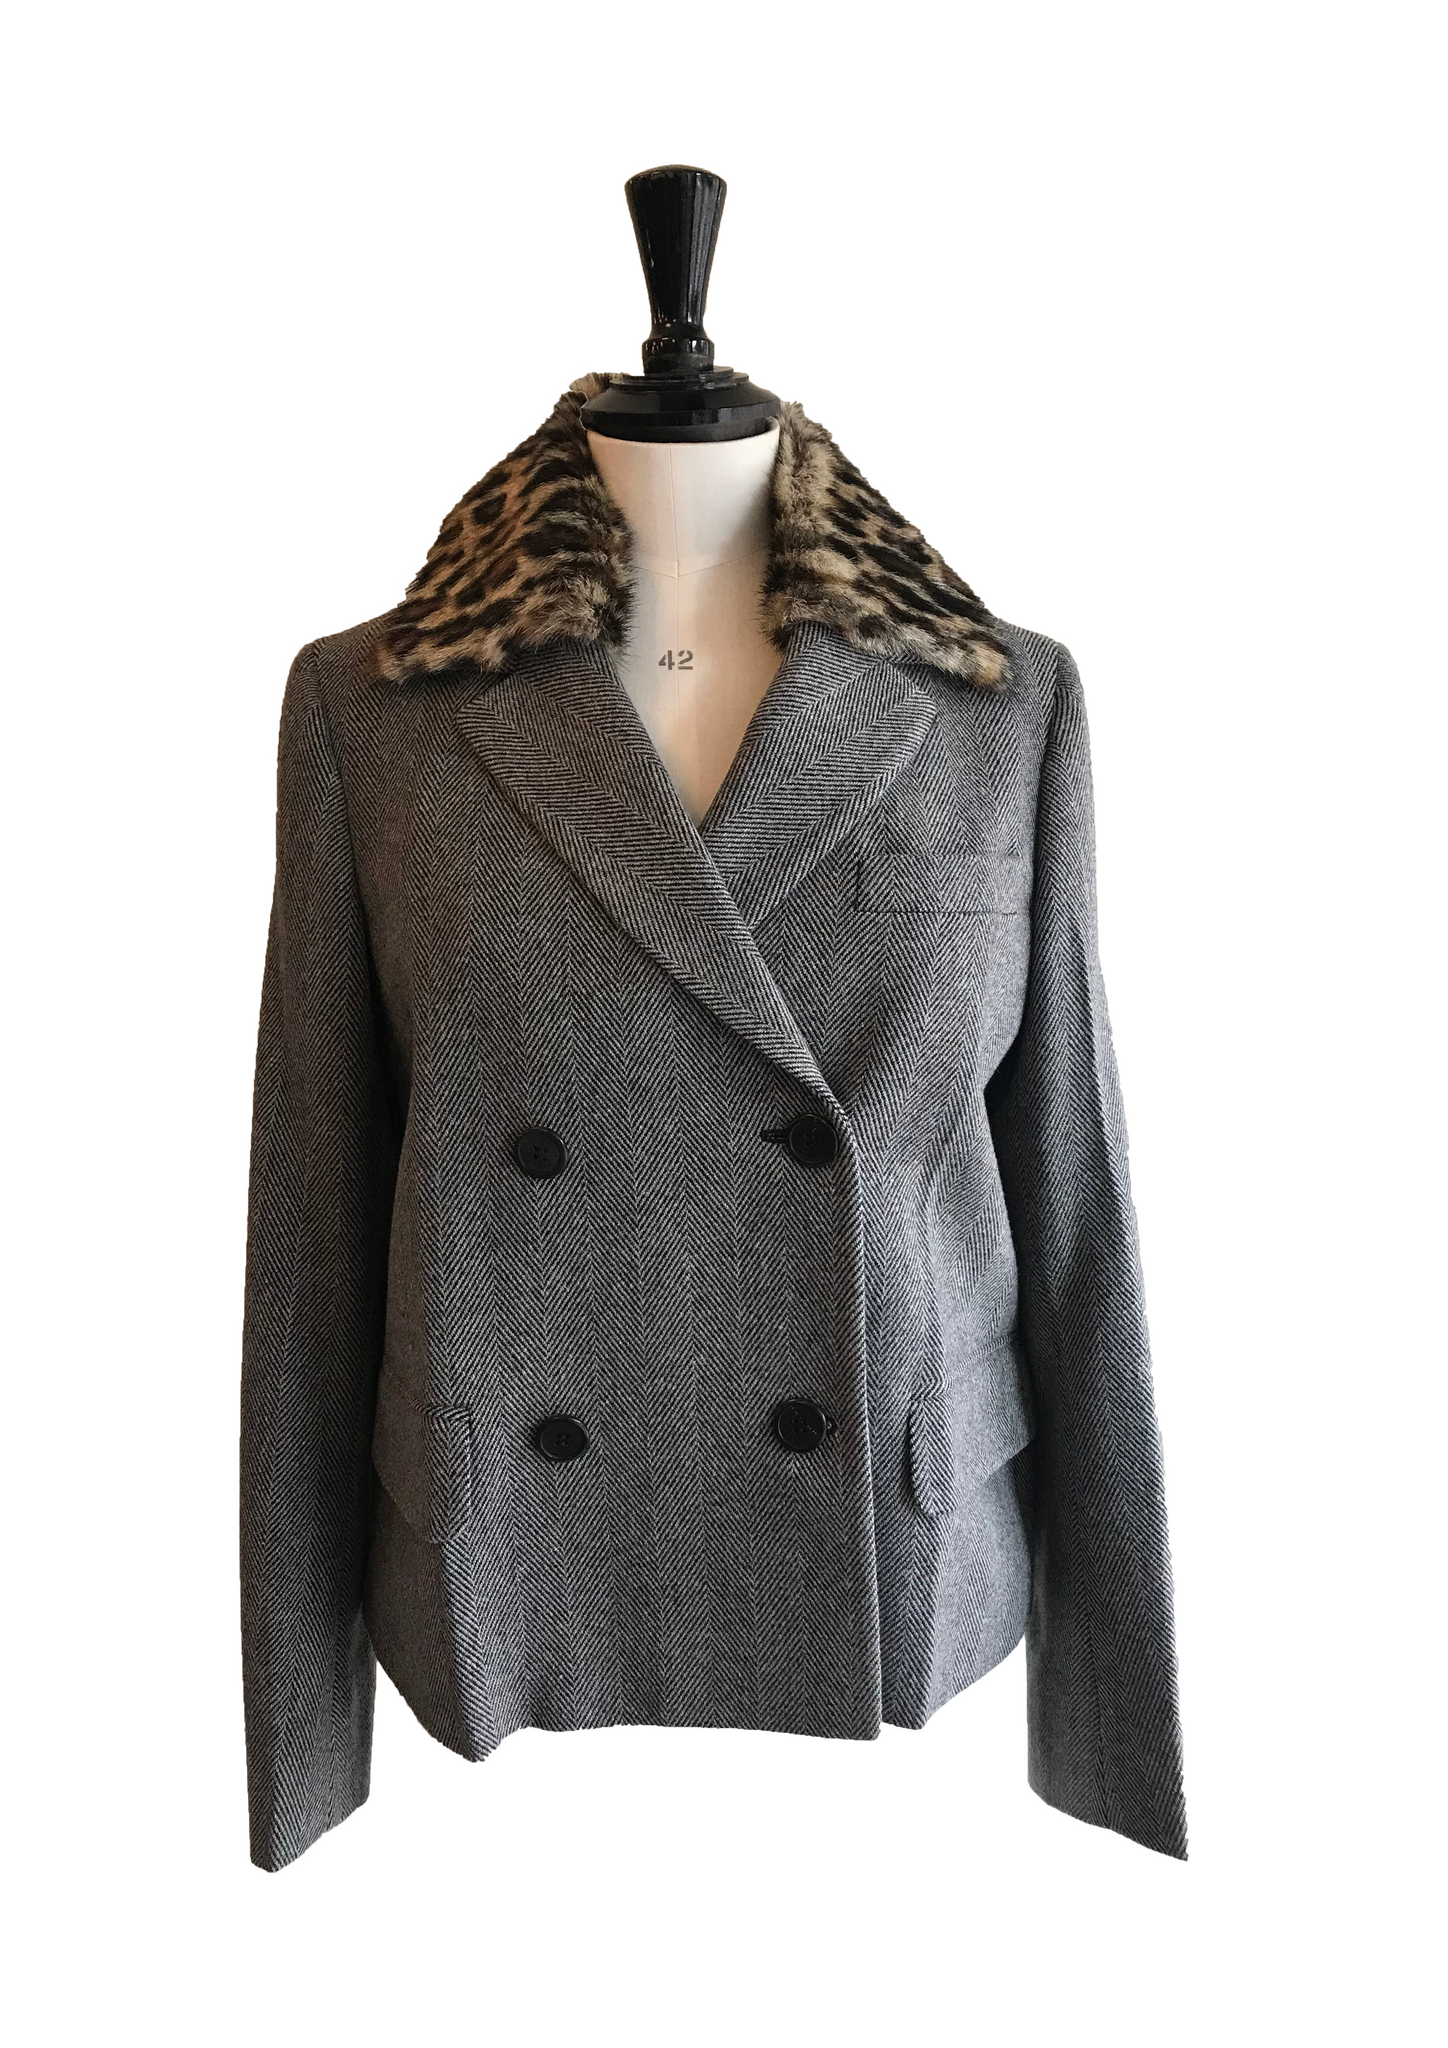 Isabella's Wardrobe Prada Houndstooth Jacket with Fur Trim.